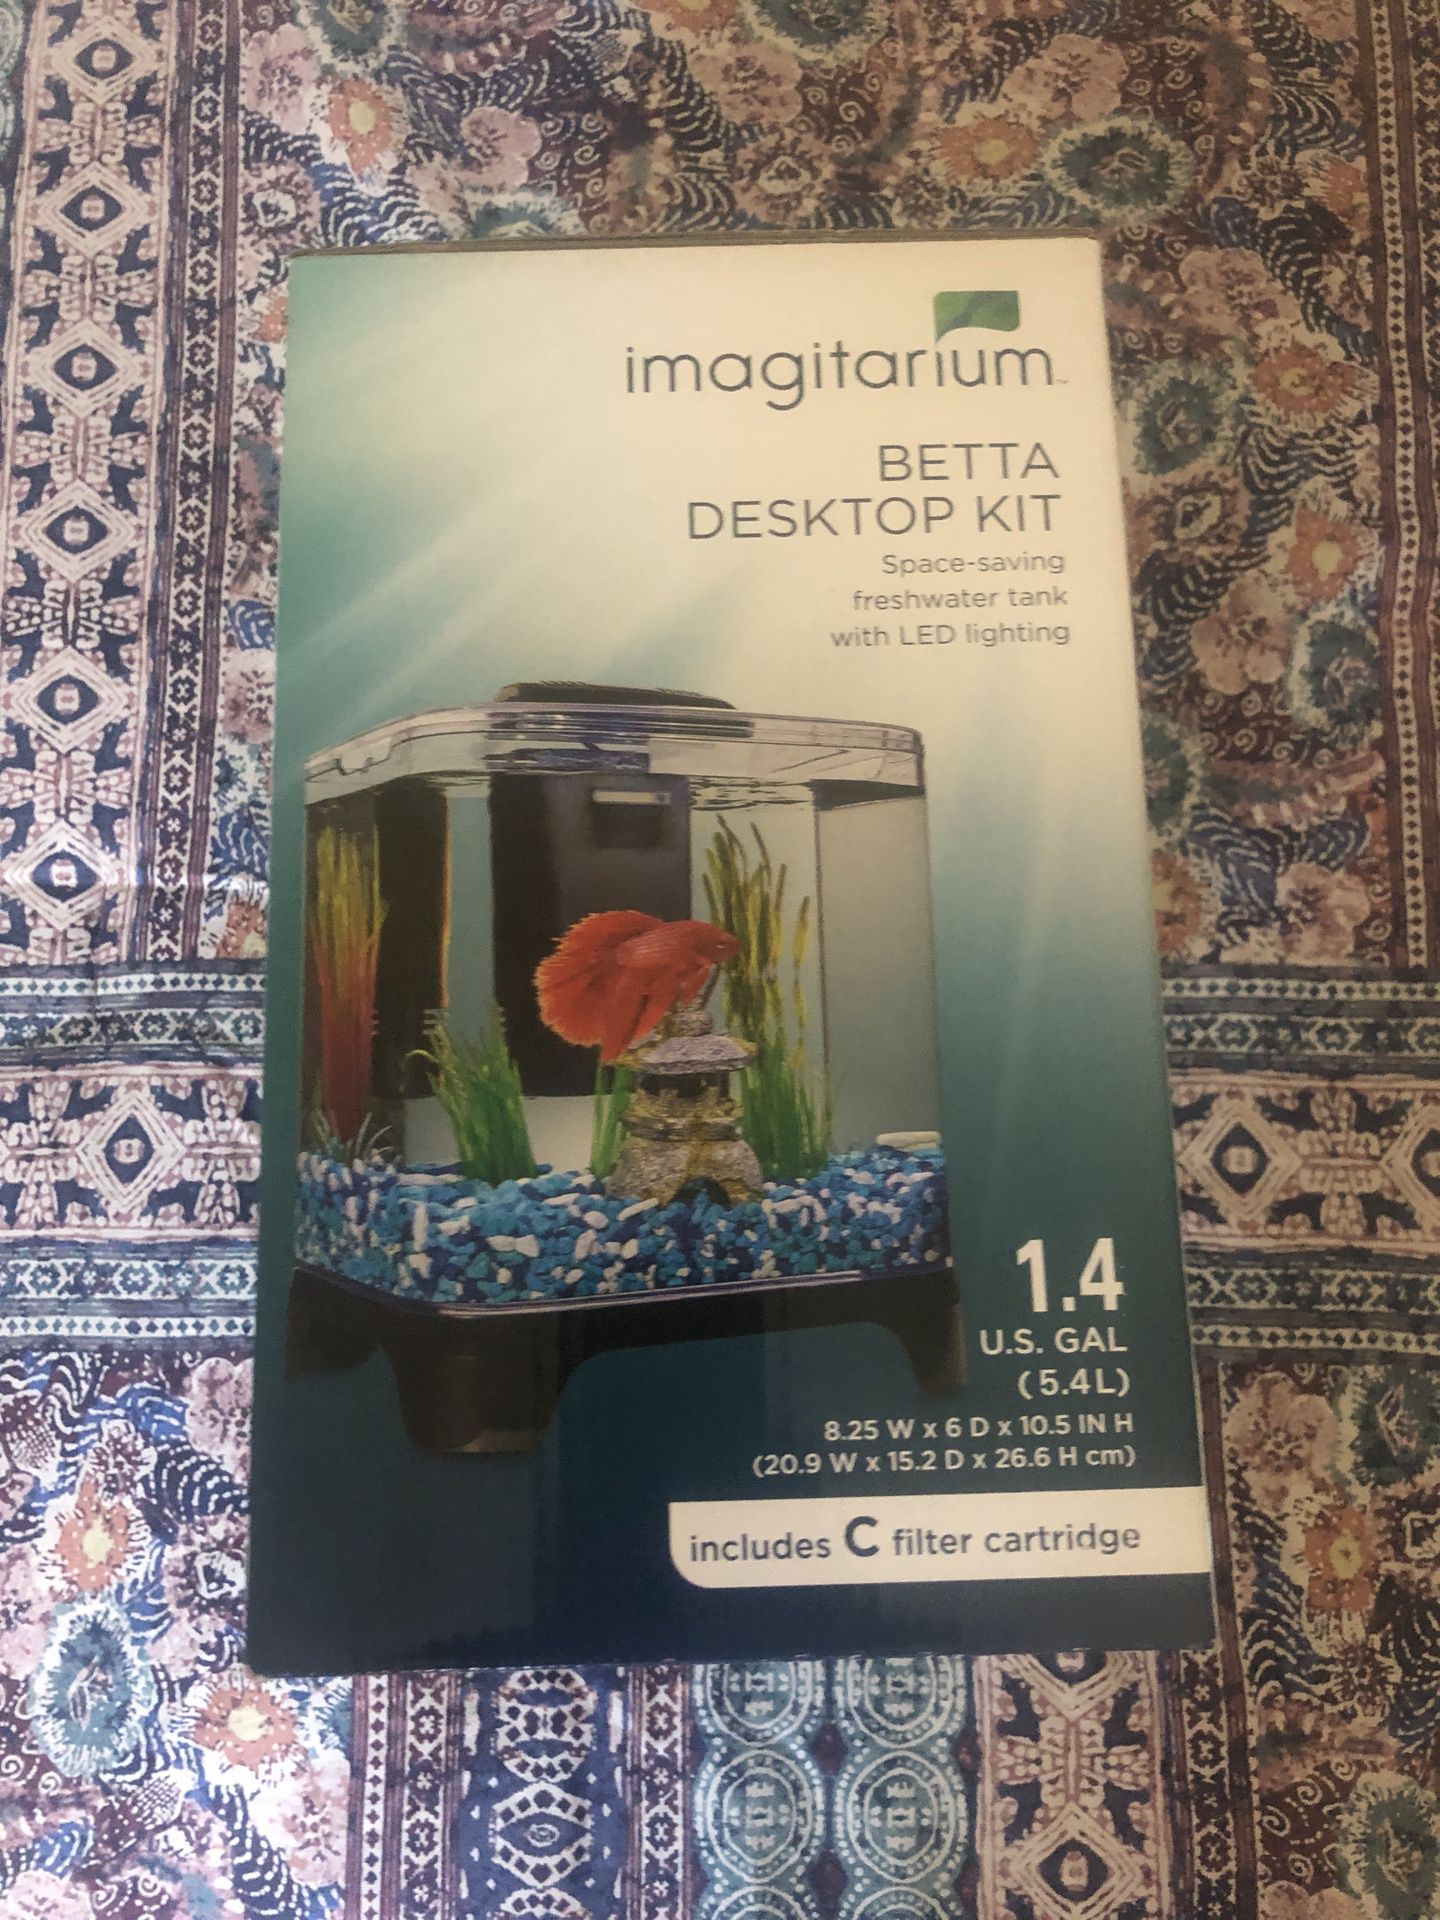 Imagitarium Betta Desktop Kit - new tank with packaging